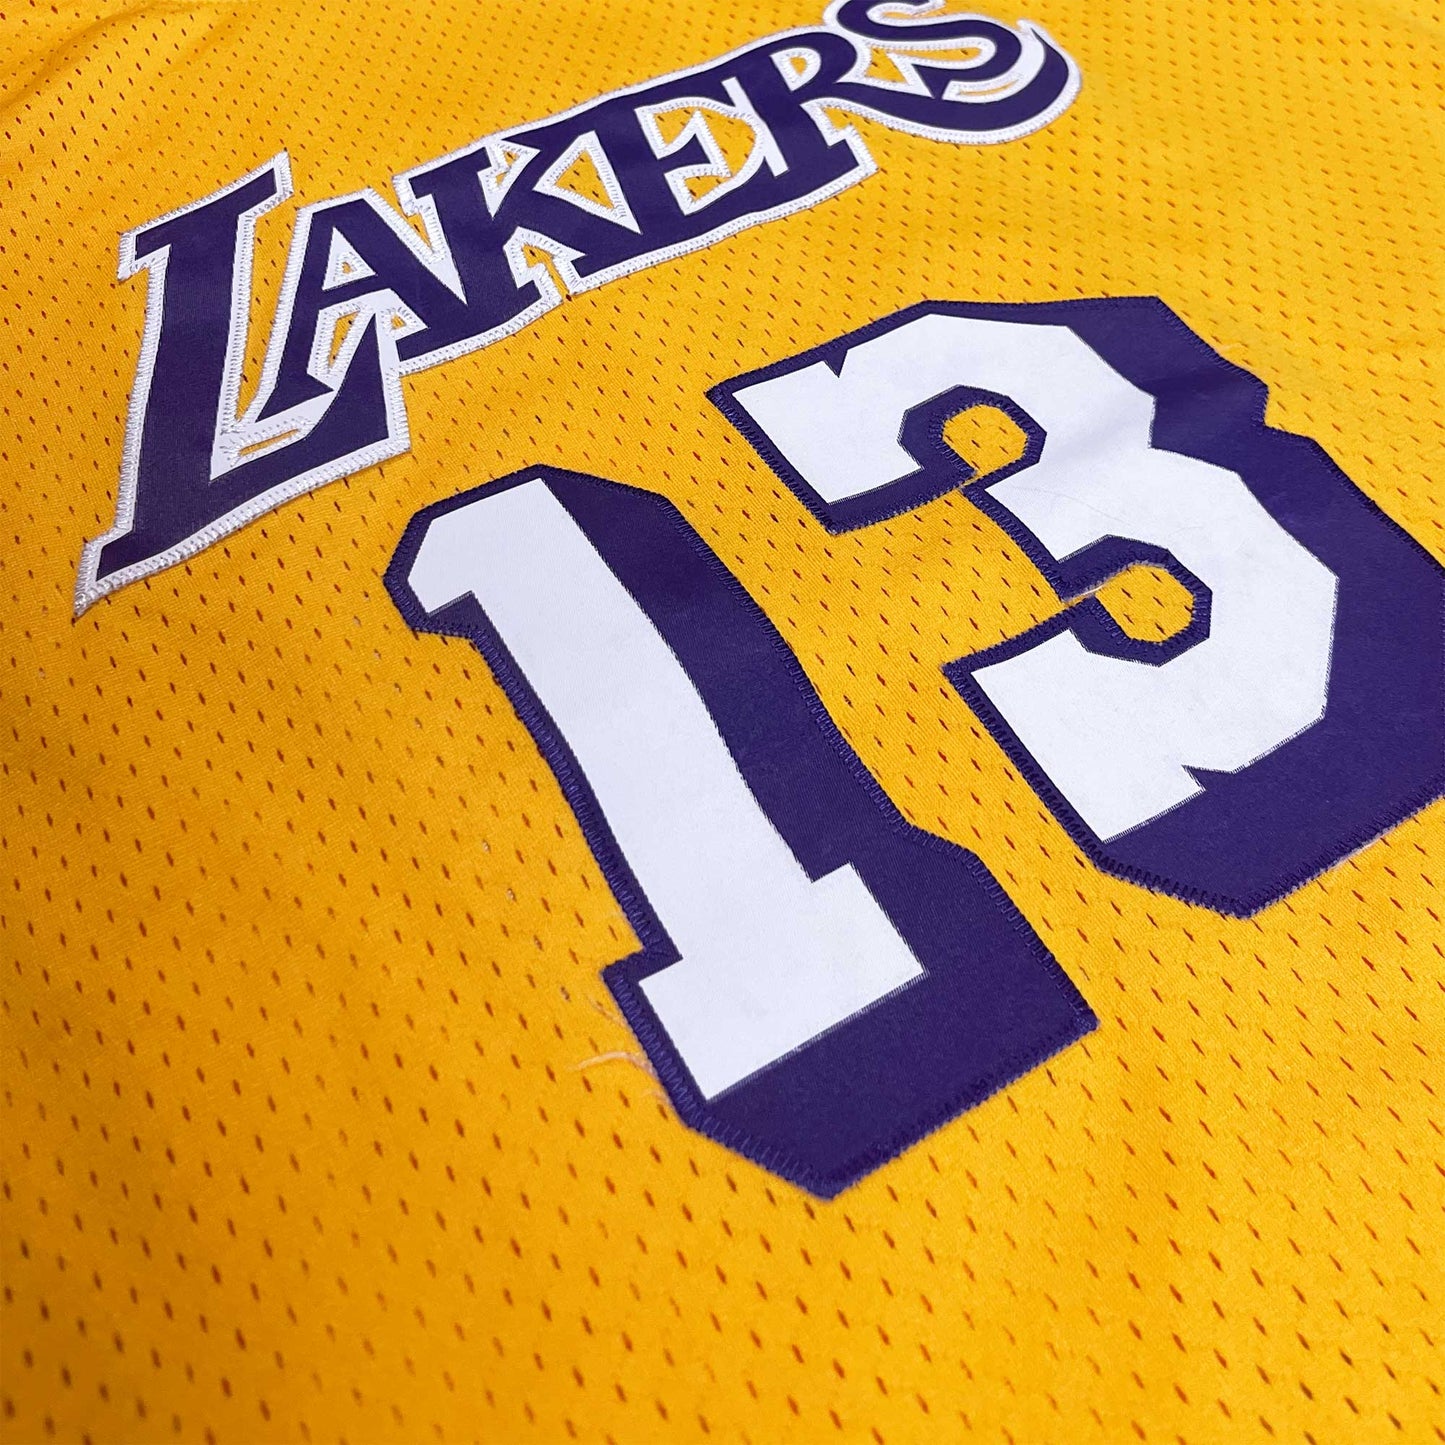 Los Angeles Lakers - Wilt Chamberlain - Größe M - Adidas - NBA Trikot